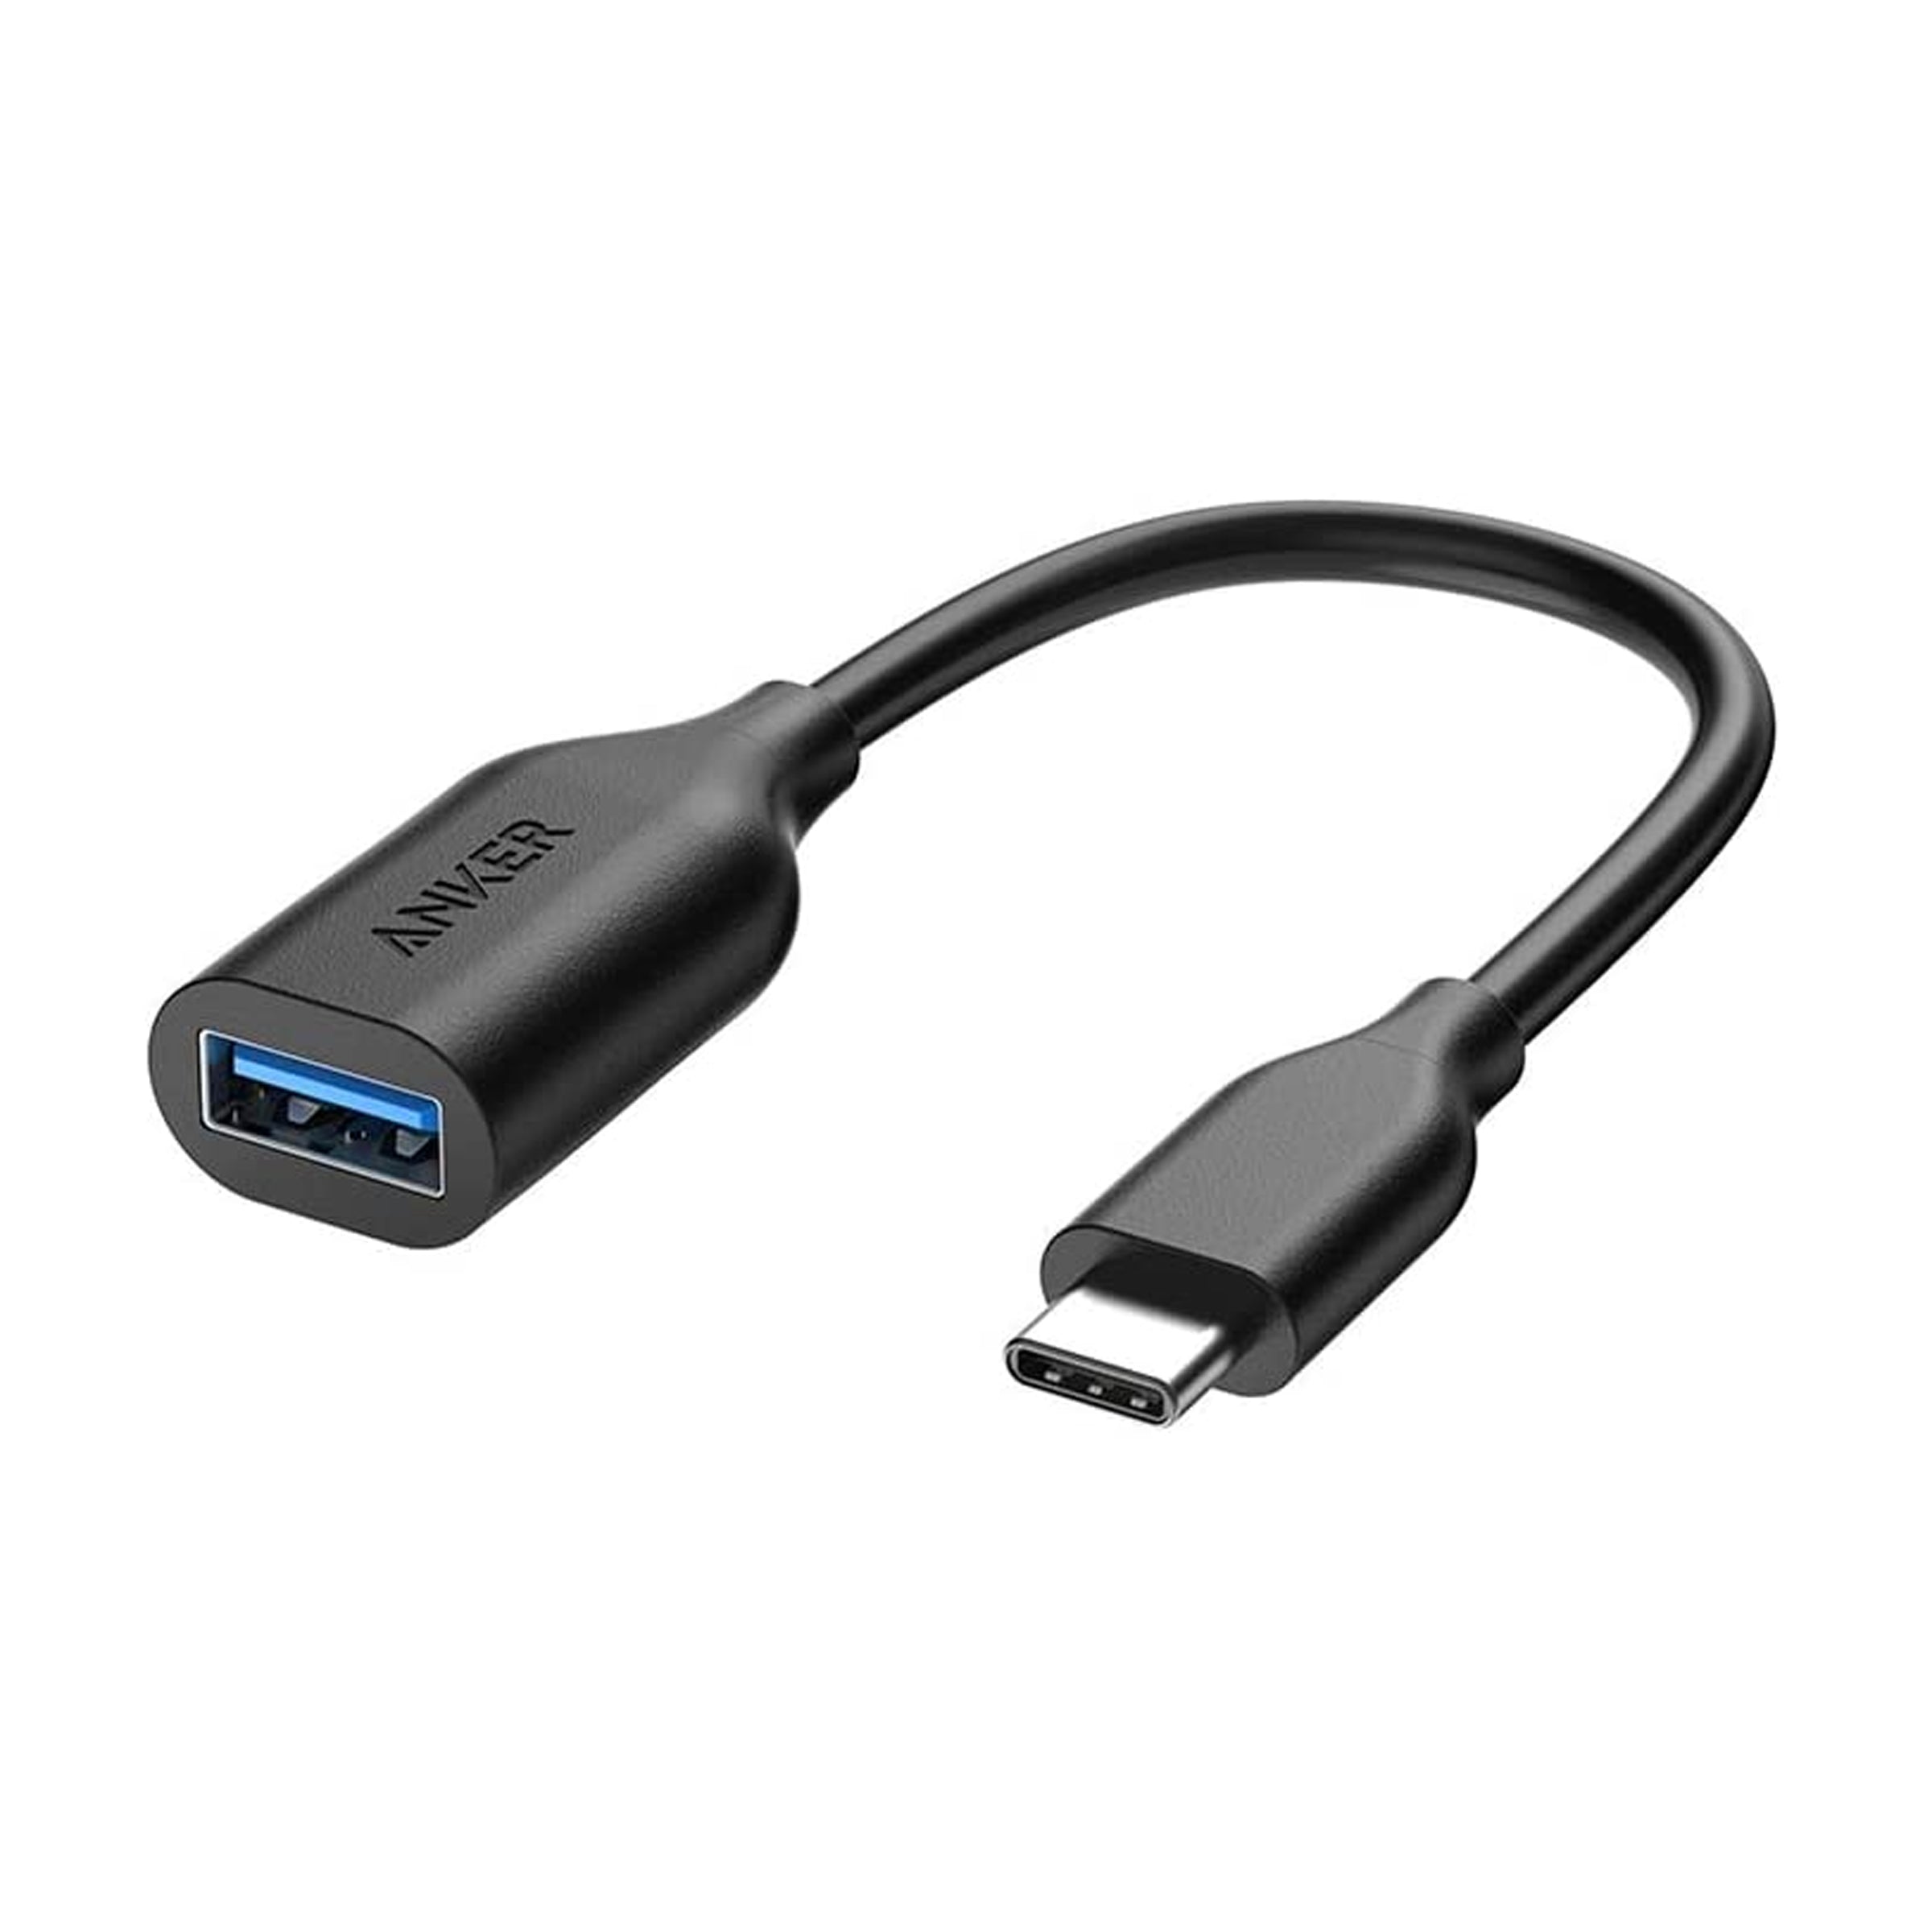 USB-C to USB 3.1 Adapter